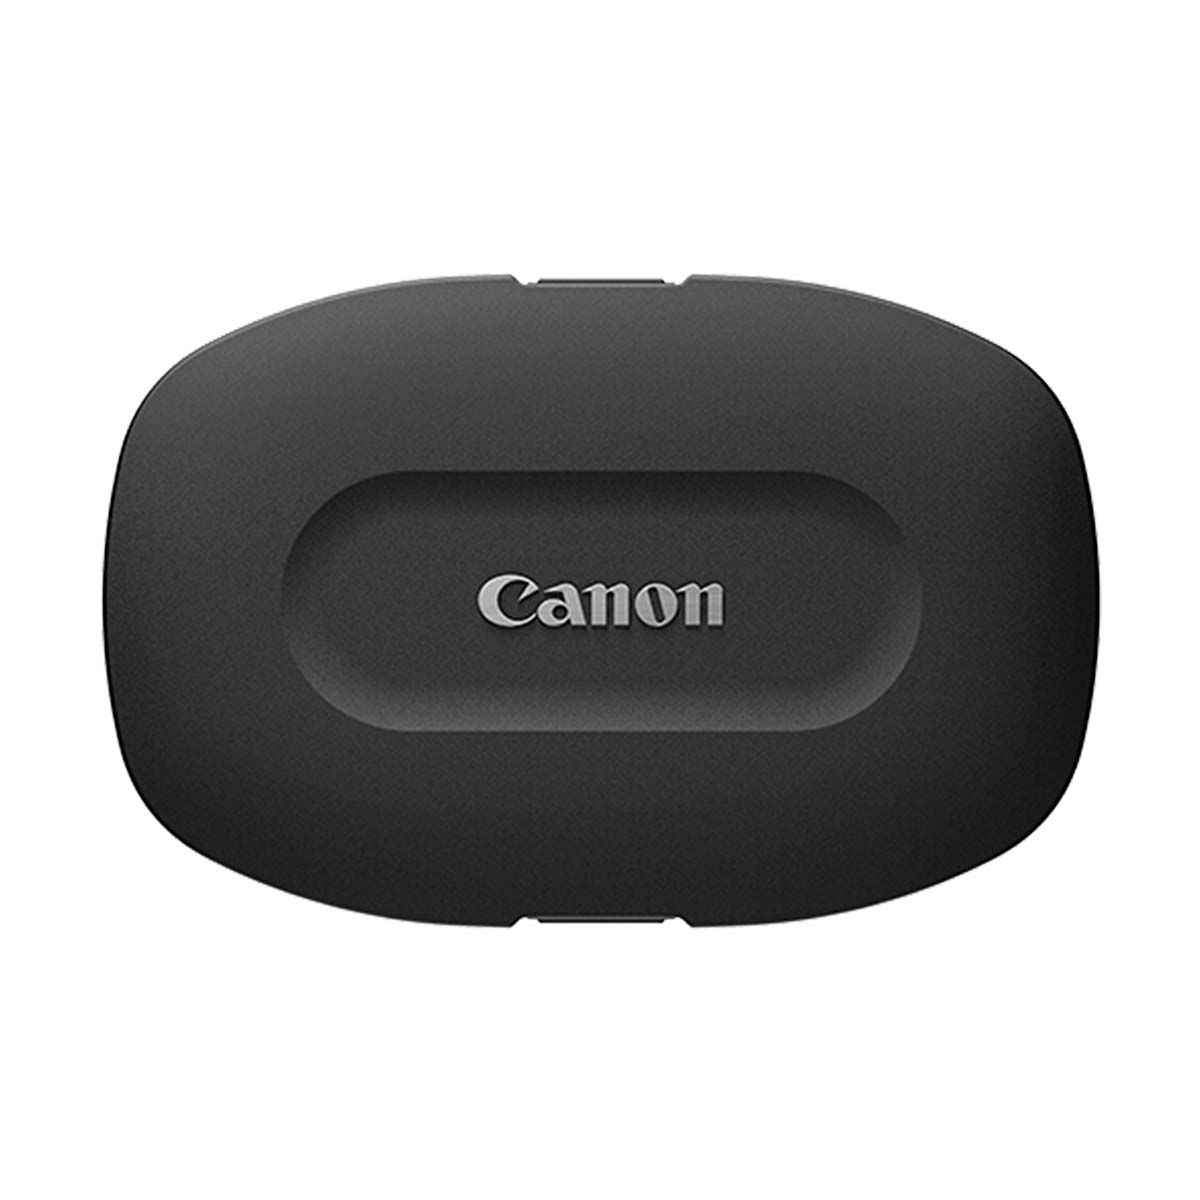 Canon RF 5.2mm F2.8L Dual Fisheye 3D VR Lens *OPEN BOX*